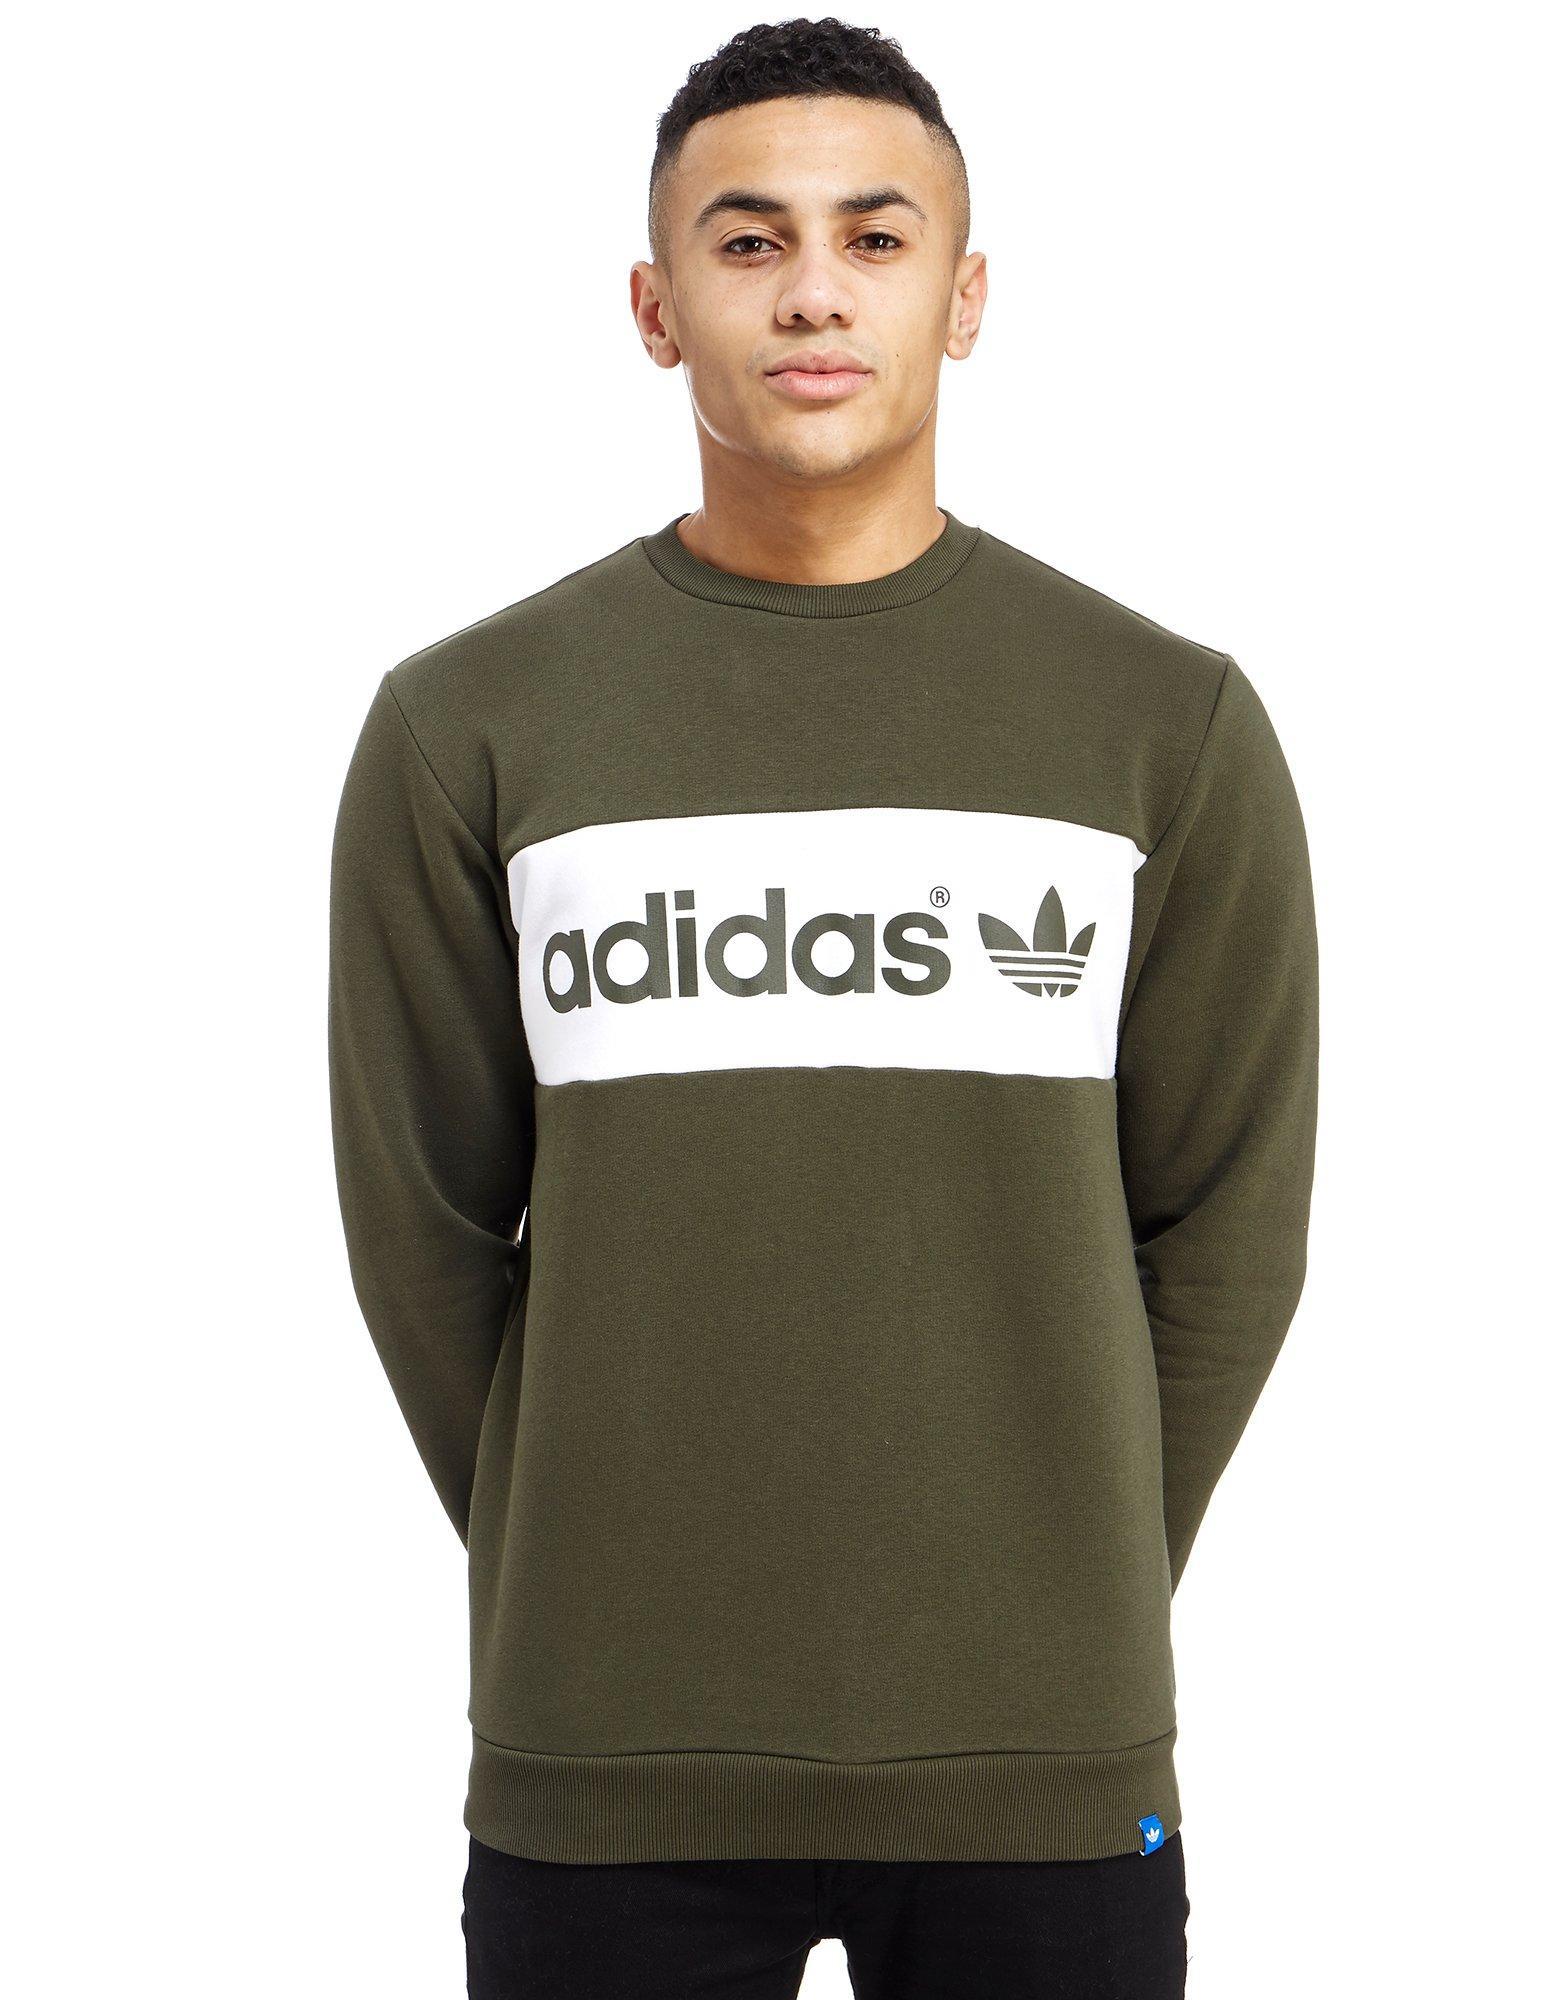 adidas Originals Cotton Linear Colour Block Crew Sweatshirt in Cargo  (Green) for Men - Lyst